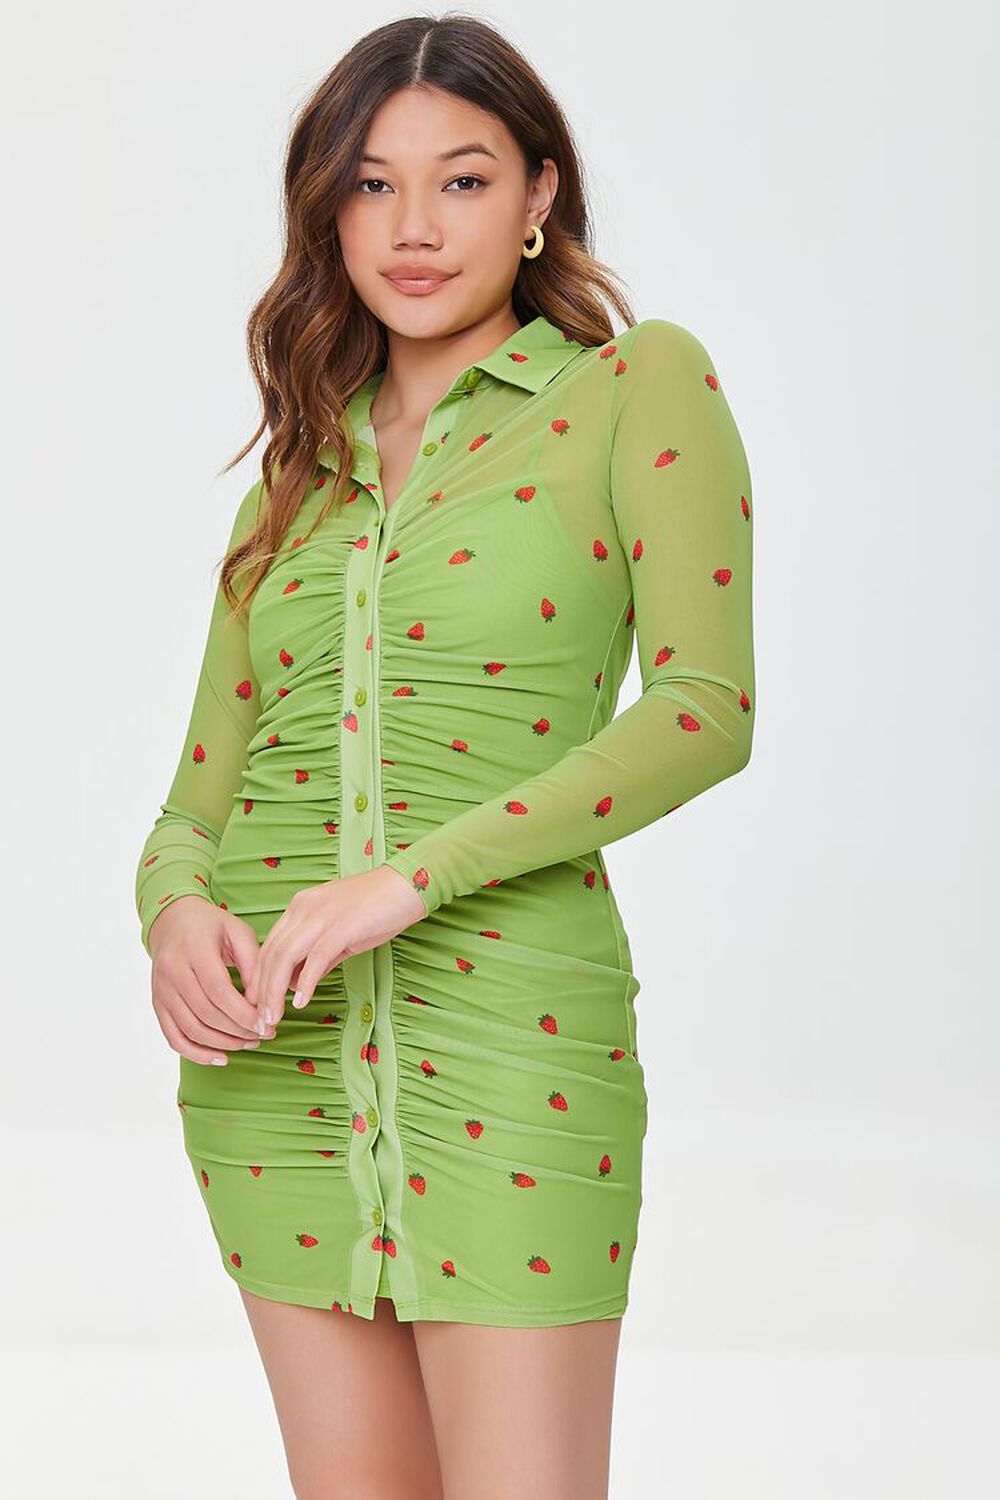 GREEN/MULTI Mesh Strawberry Print Mini Dress, image 1